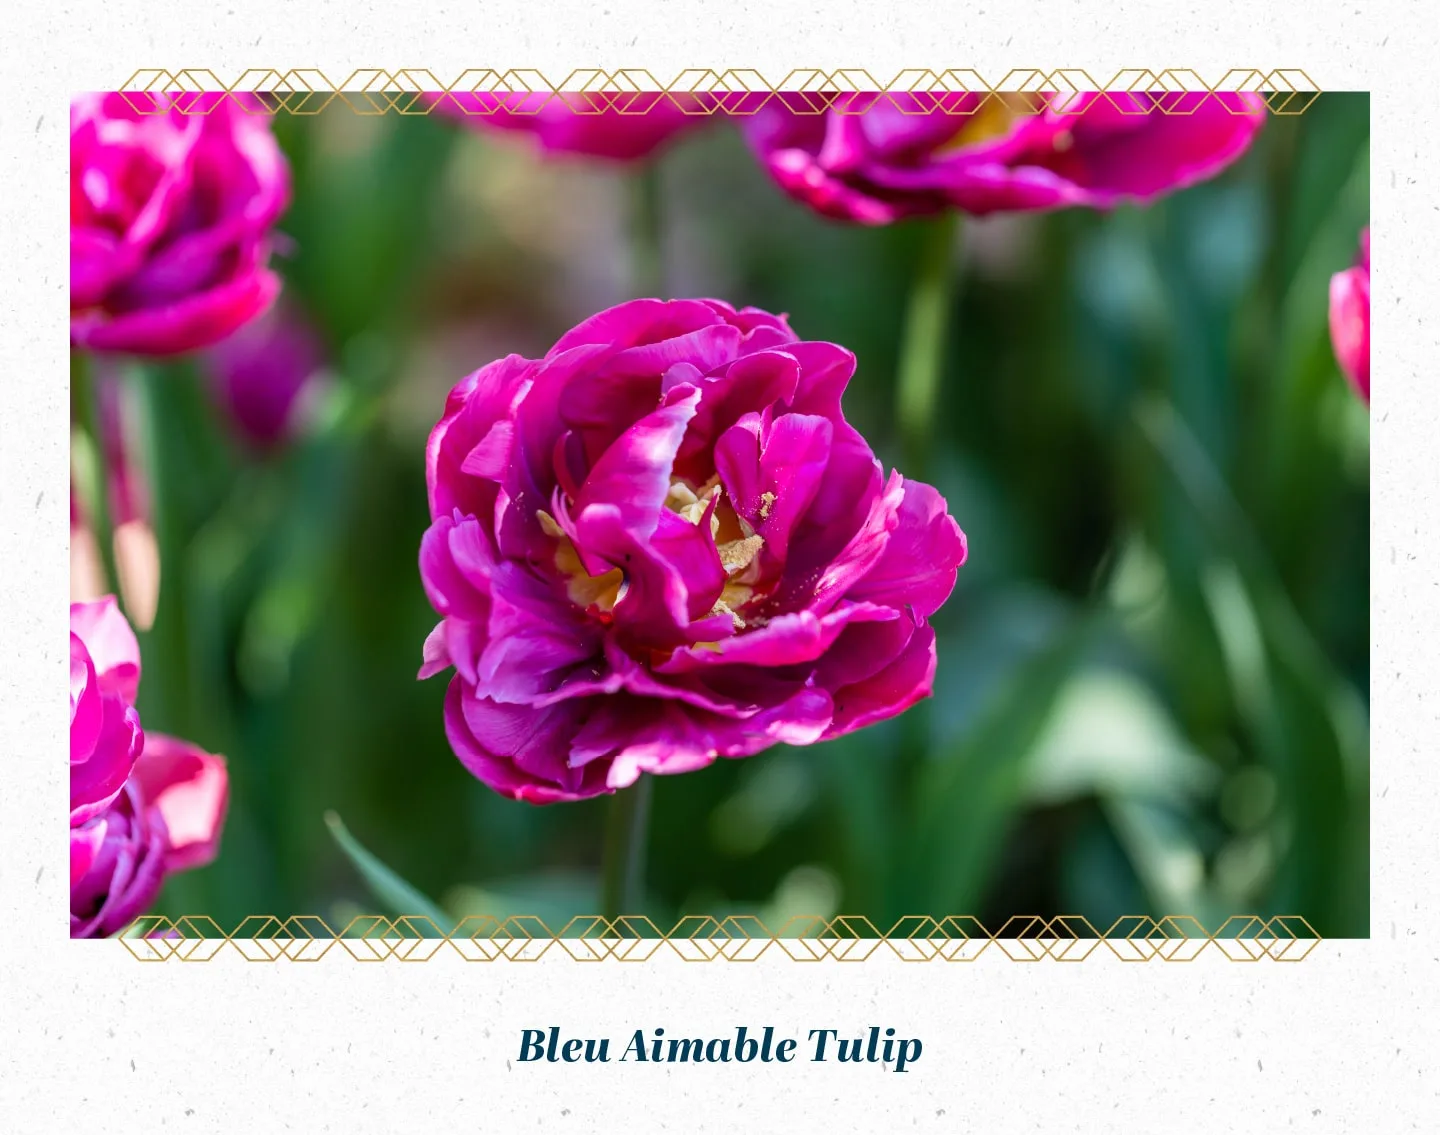 bleu-aimable-tulip-min